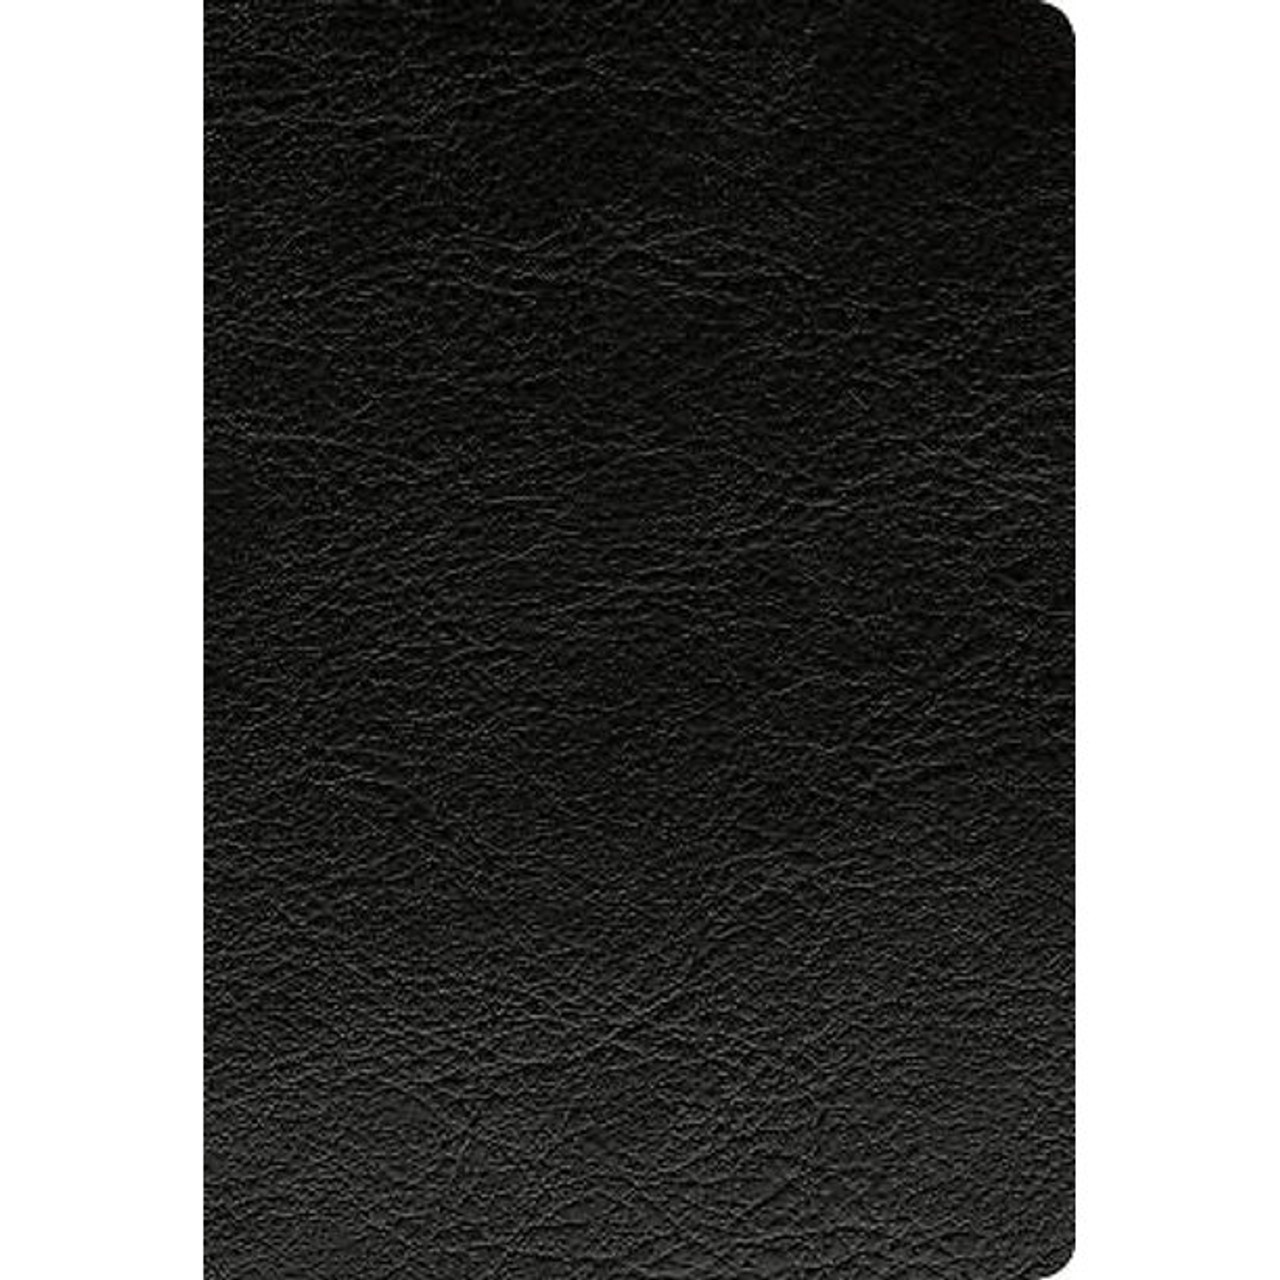 NLT The Swindoll Study Bible Large Print Leather-Like, Black